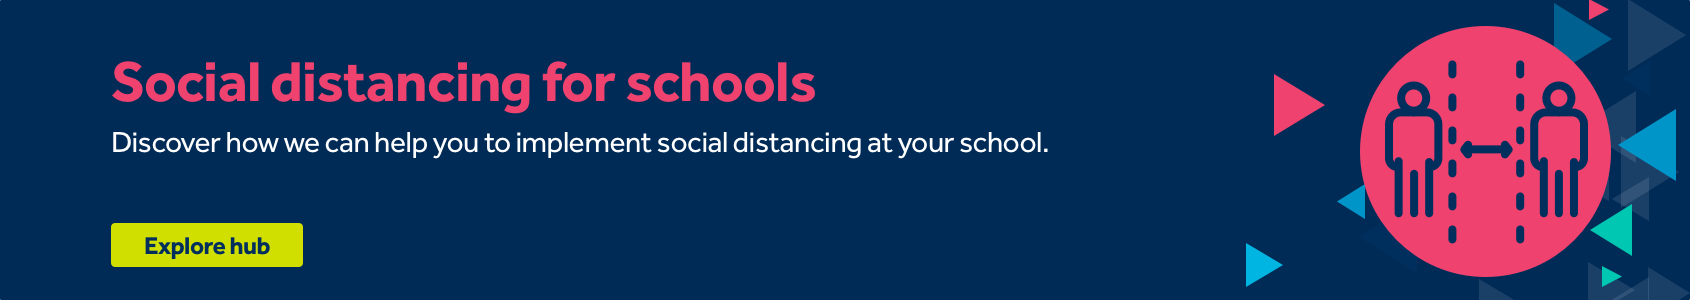 Social distancing for schools